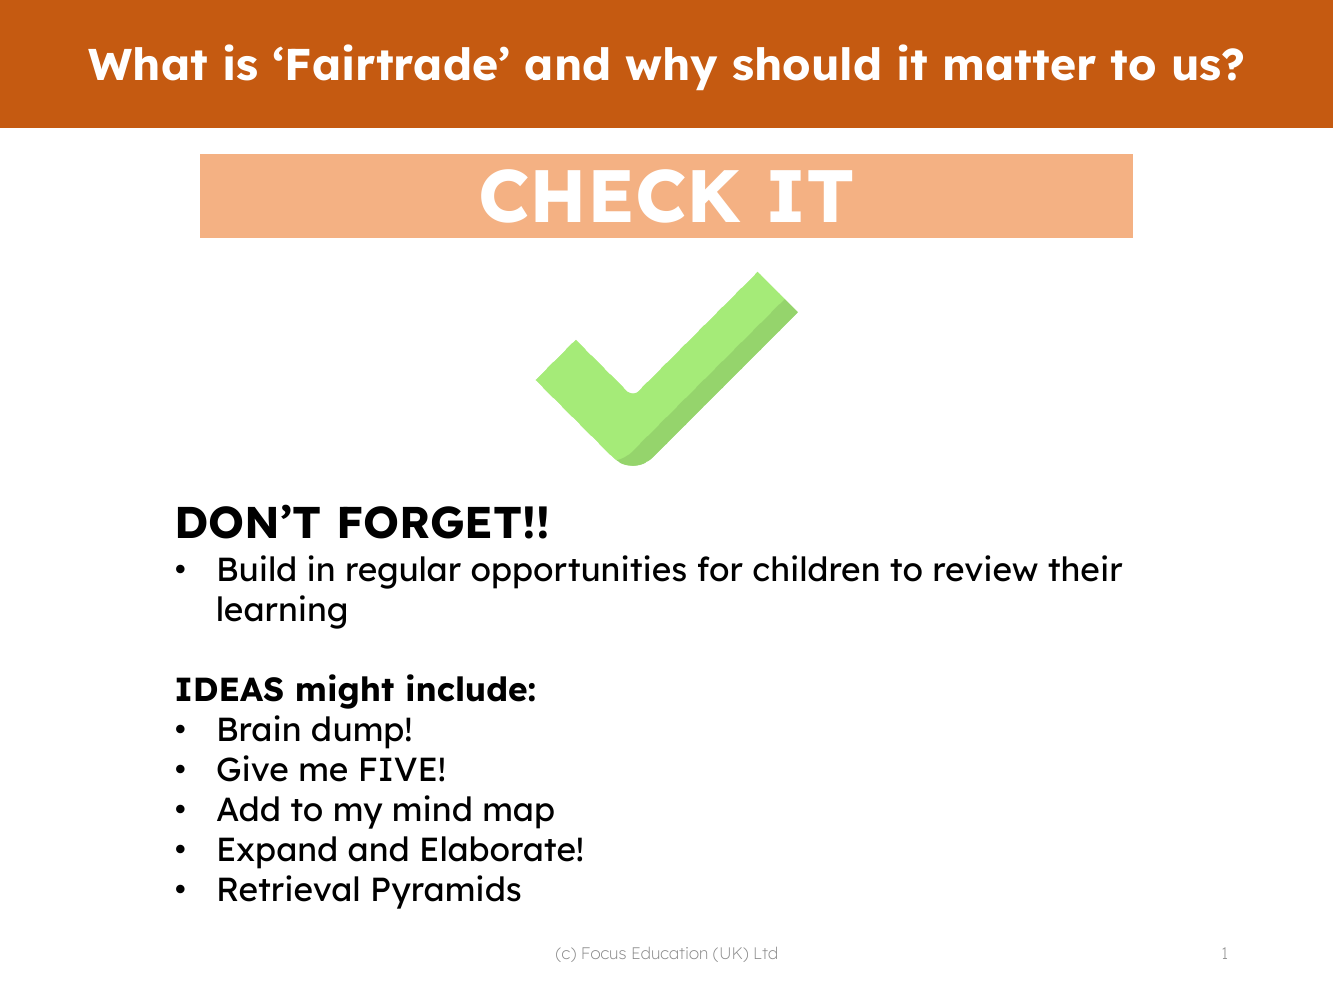 Check it! - Fairtrade - 4th Grade